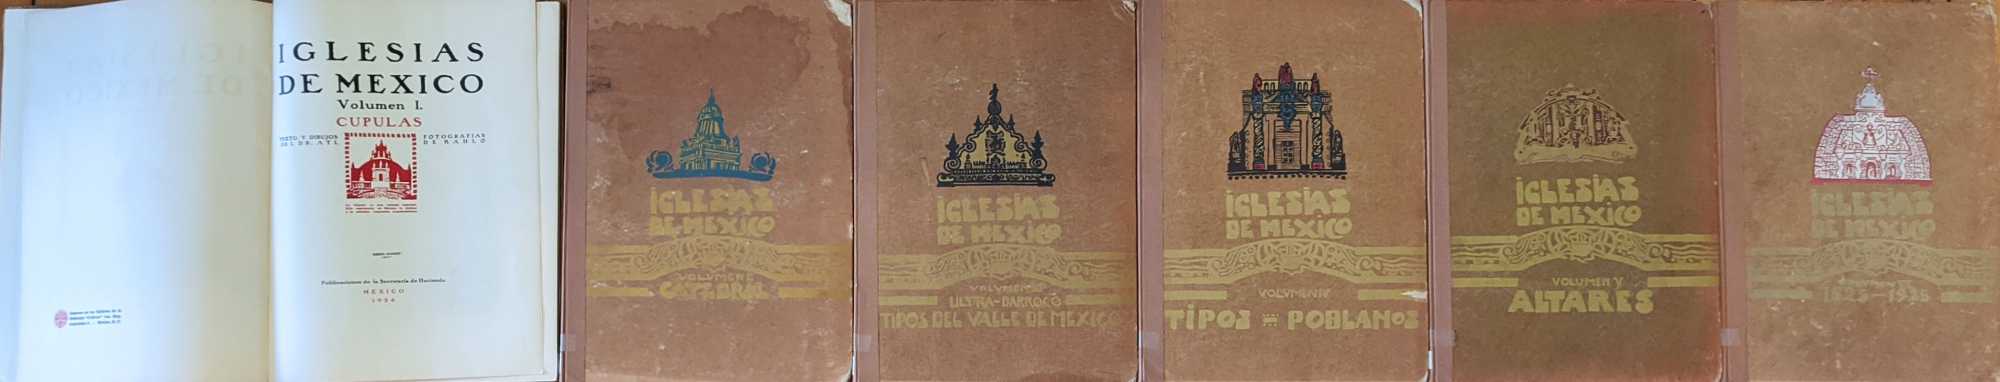 Dr. Atl (Gerardo Murillo Cornado); Guillermo Kahlo; Manuel Toussaint; J. R. Benitez - Iglesias de Mexico (6 Volumes)